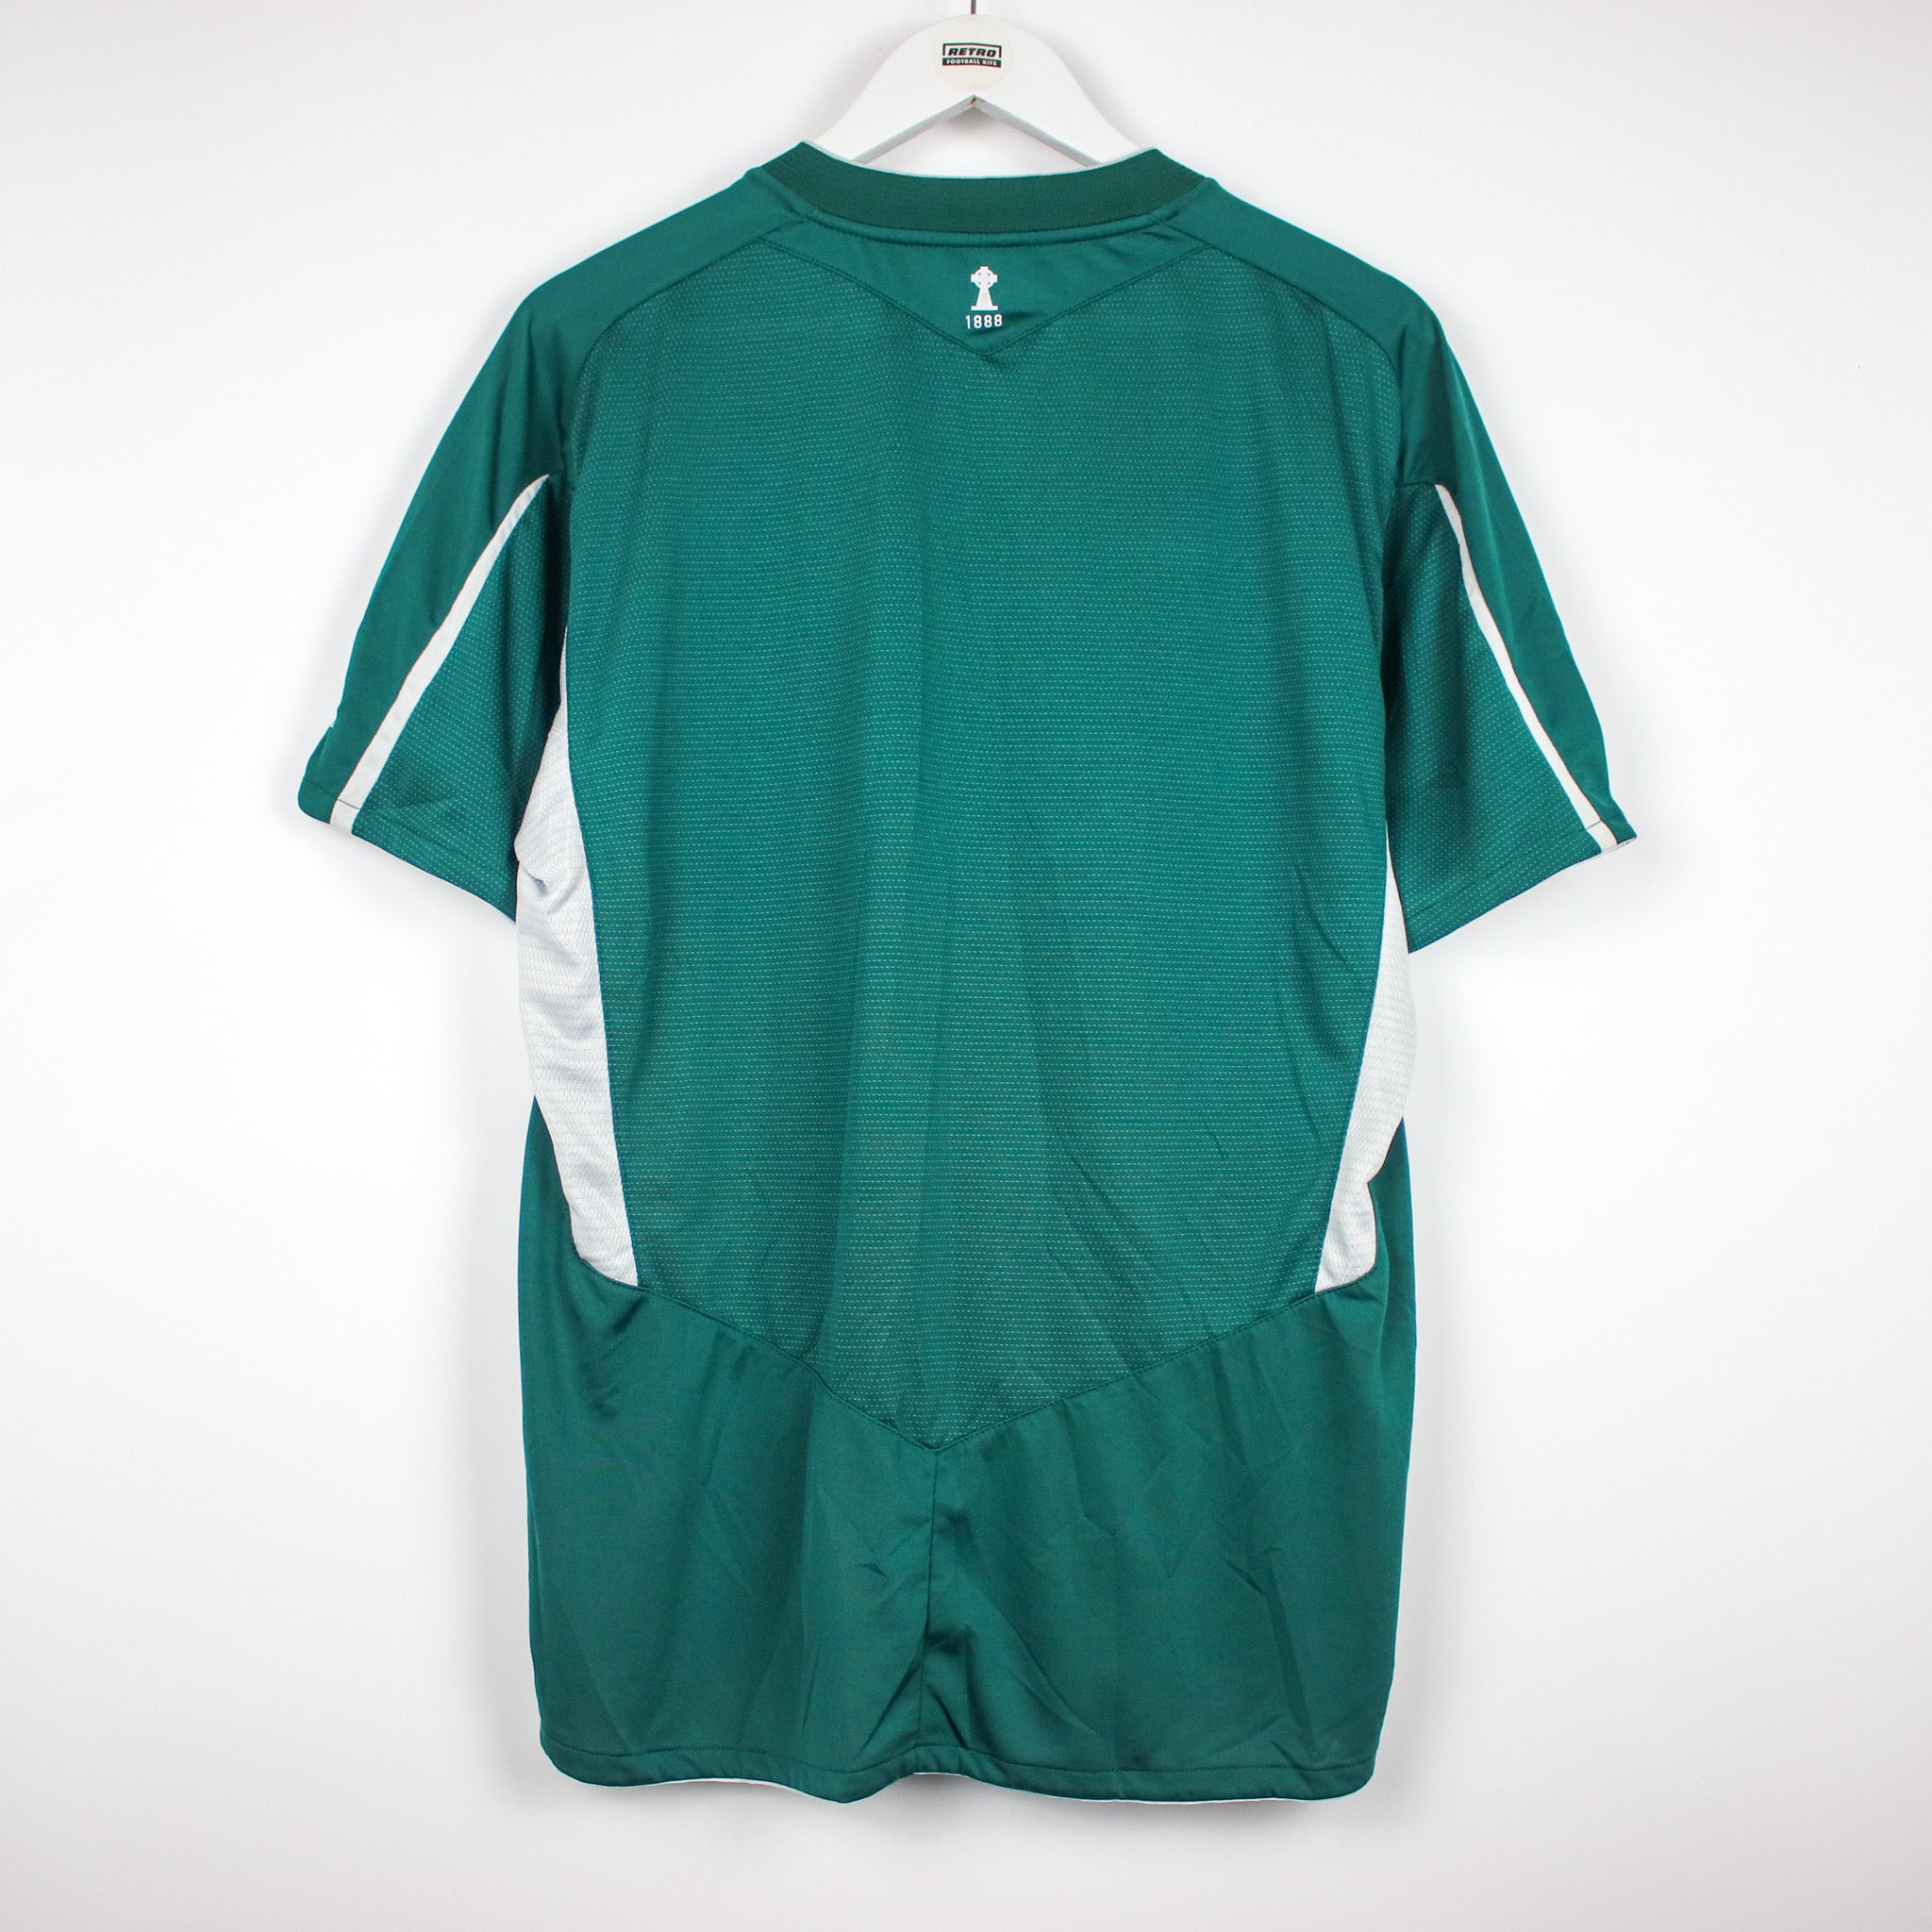 Buy 2004/05 Celtic Away Shirt (Very Good) - L - Retro Football Kits UK